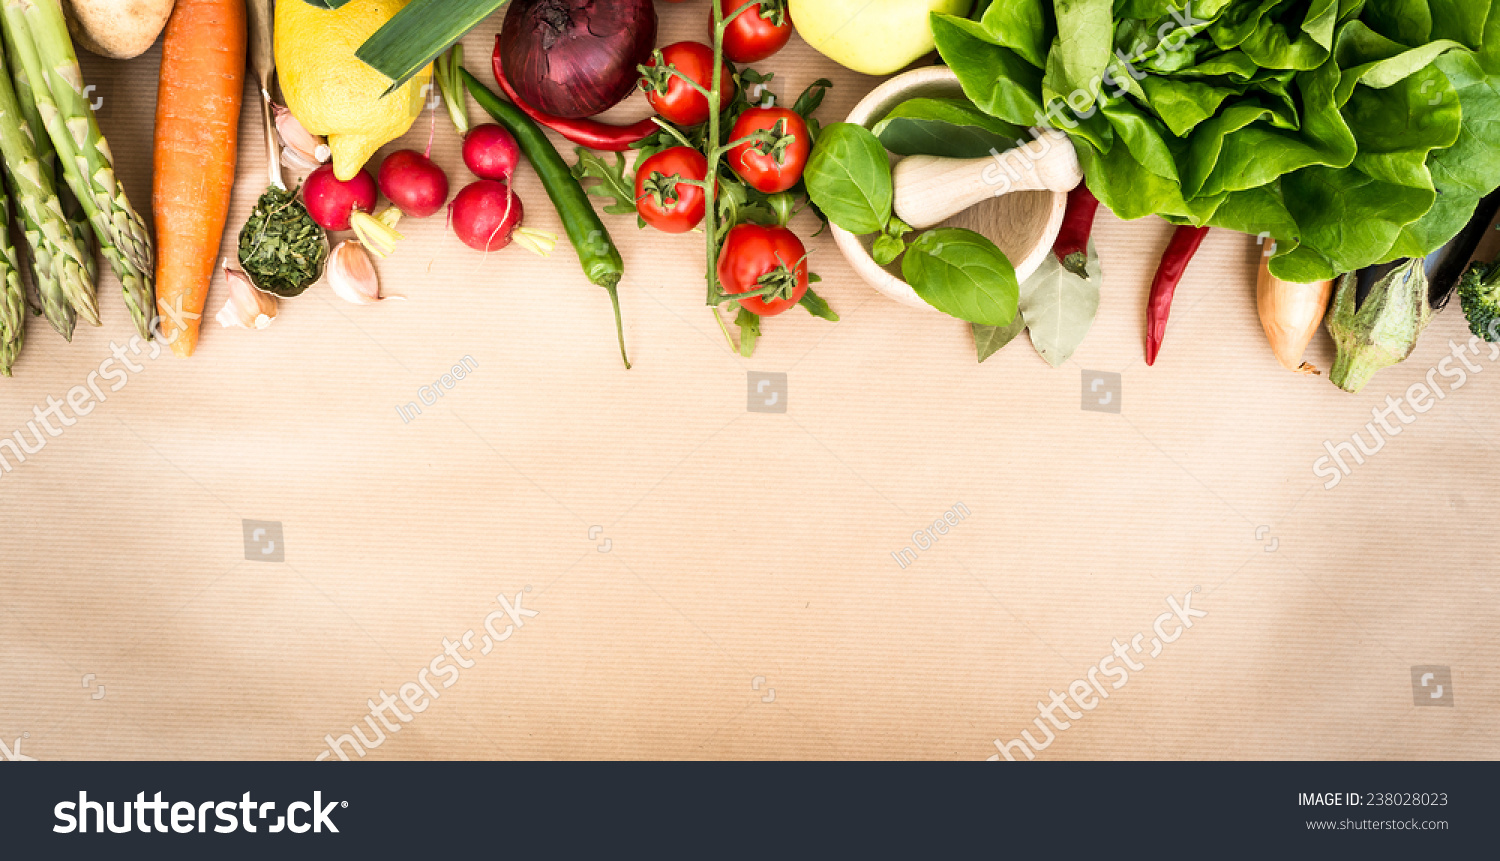 Fresh Vegetables On Brown Background Stock Photo 238028023 | Shutterstock